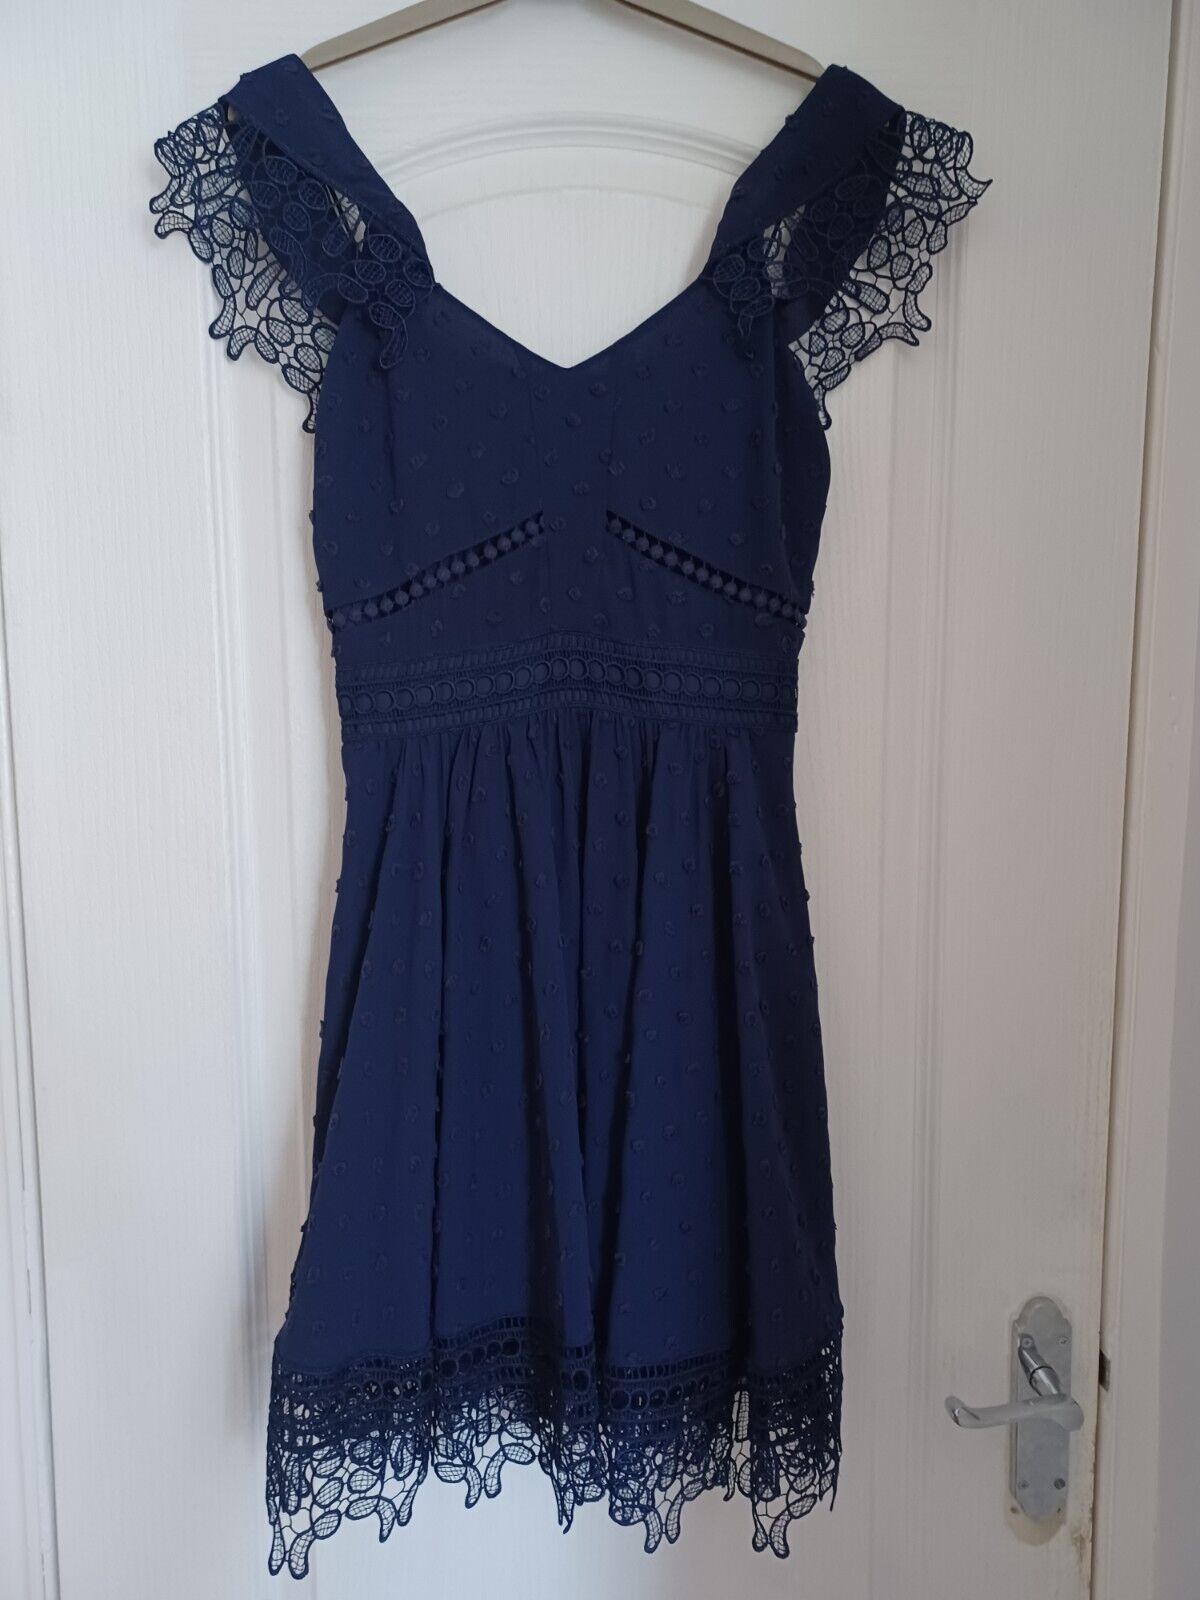 WHISTLES Navy Chiffon Evening Dress Size 6 | eBay